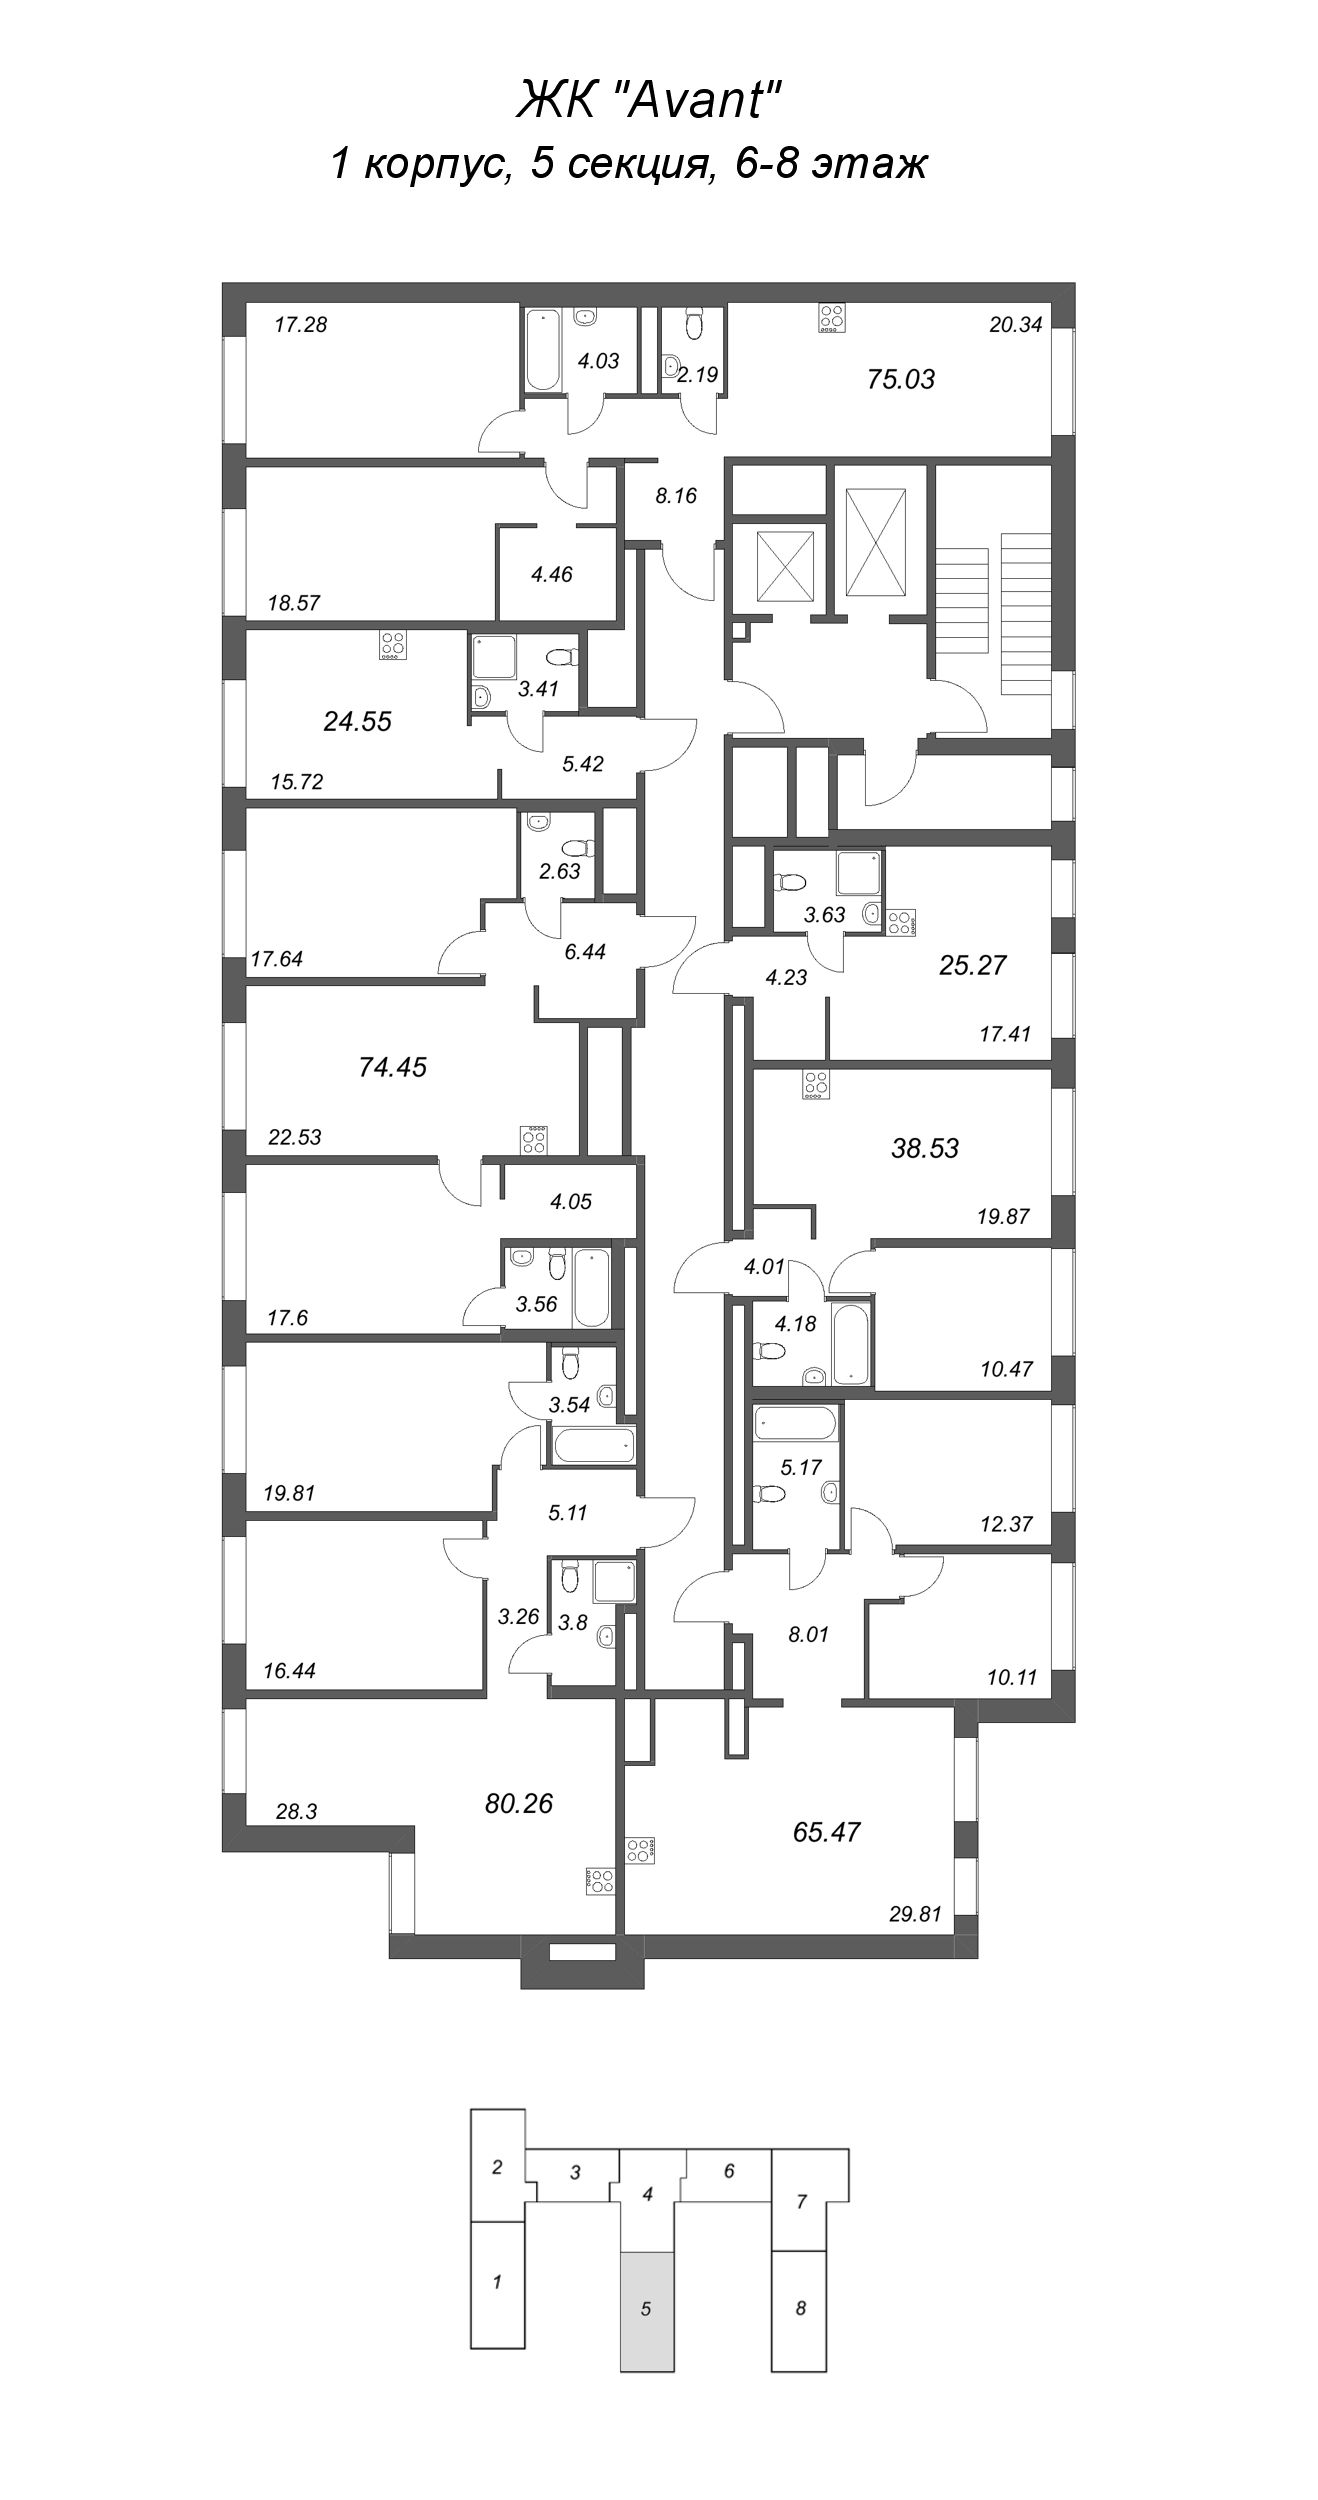 2-комнатная (Евро) квартира, 38.53 м² в ЖК "Avant" - планировка этажа